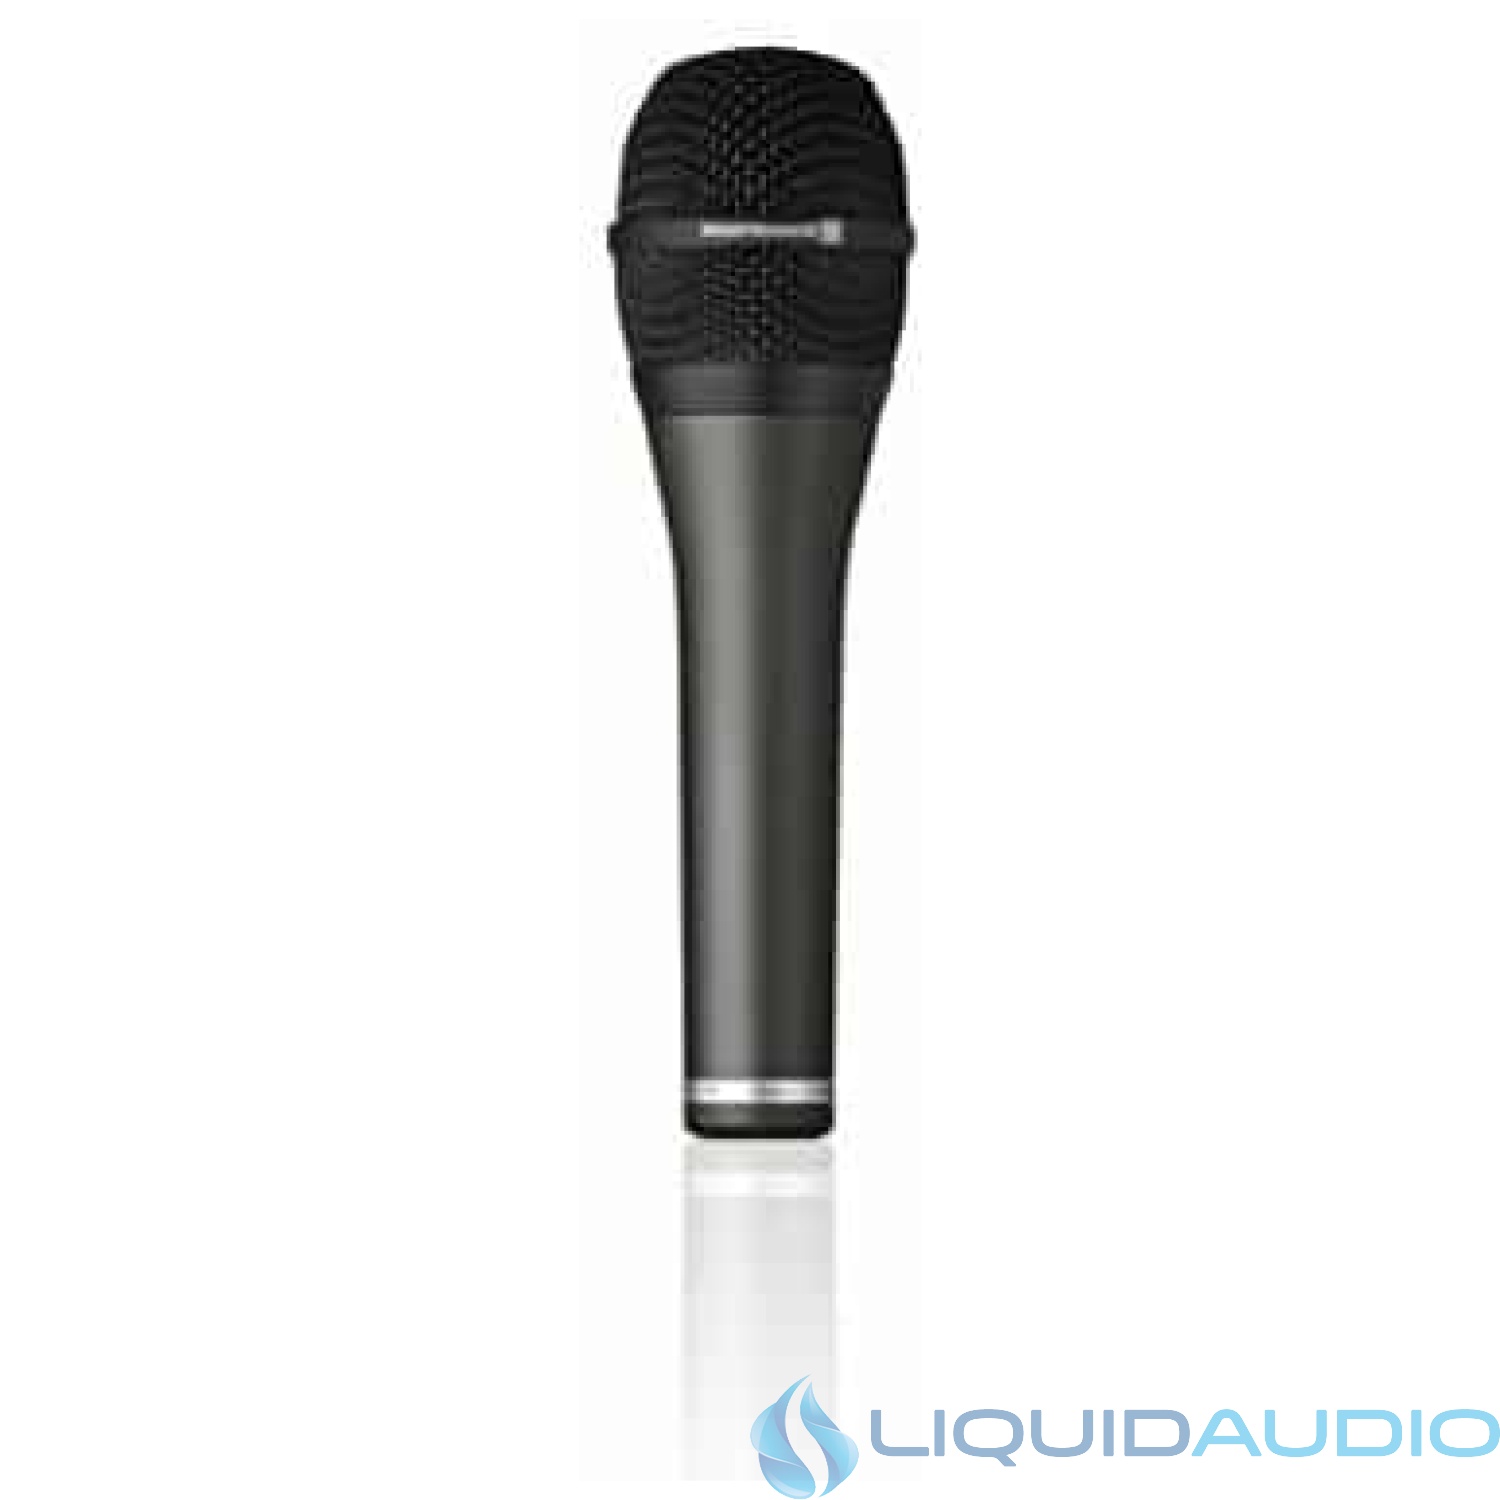 Beyerdynamic TG V70 Professional Dynamic Hypercardioid Microphone for Vocals